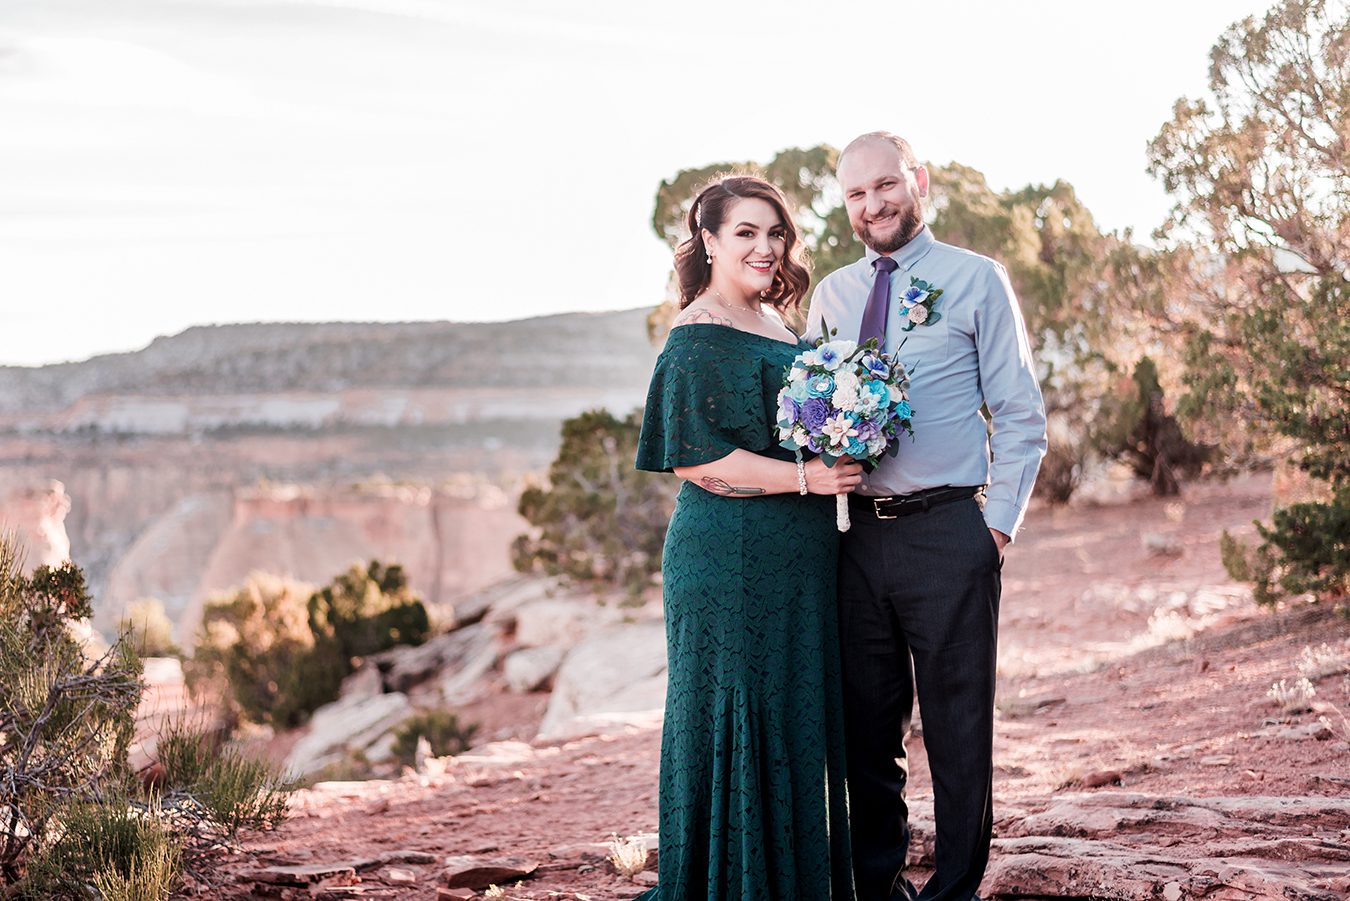 Craig & Jessica's Elopement on the Colorado National Monument | Amanda Matilda Photography